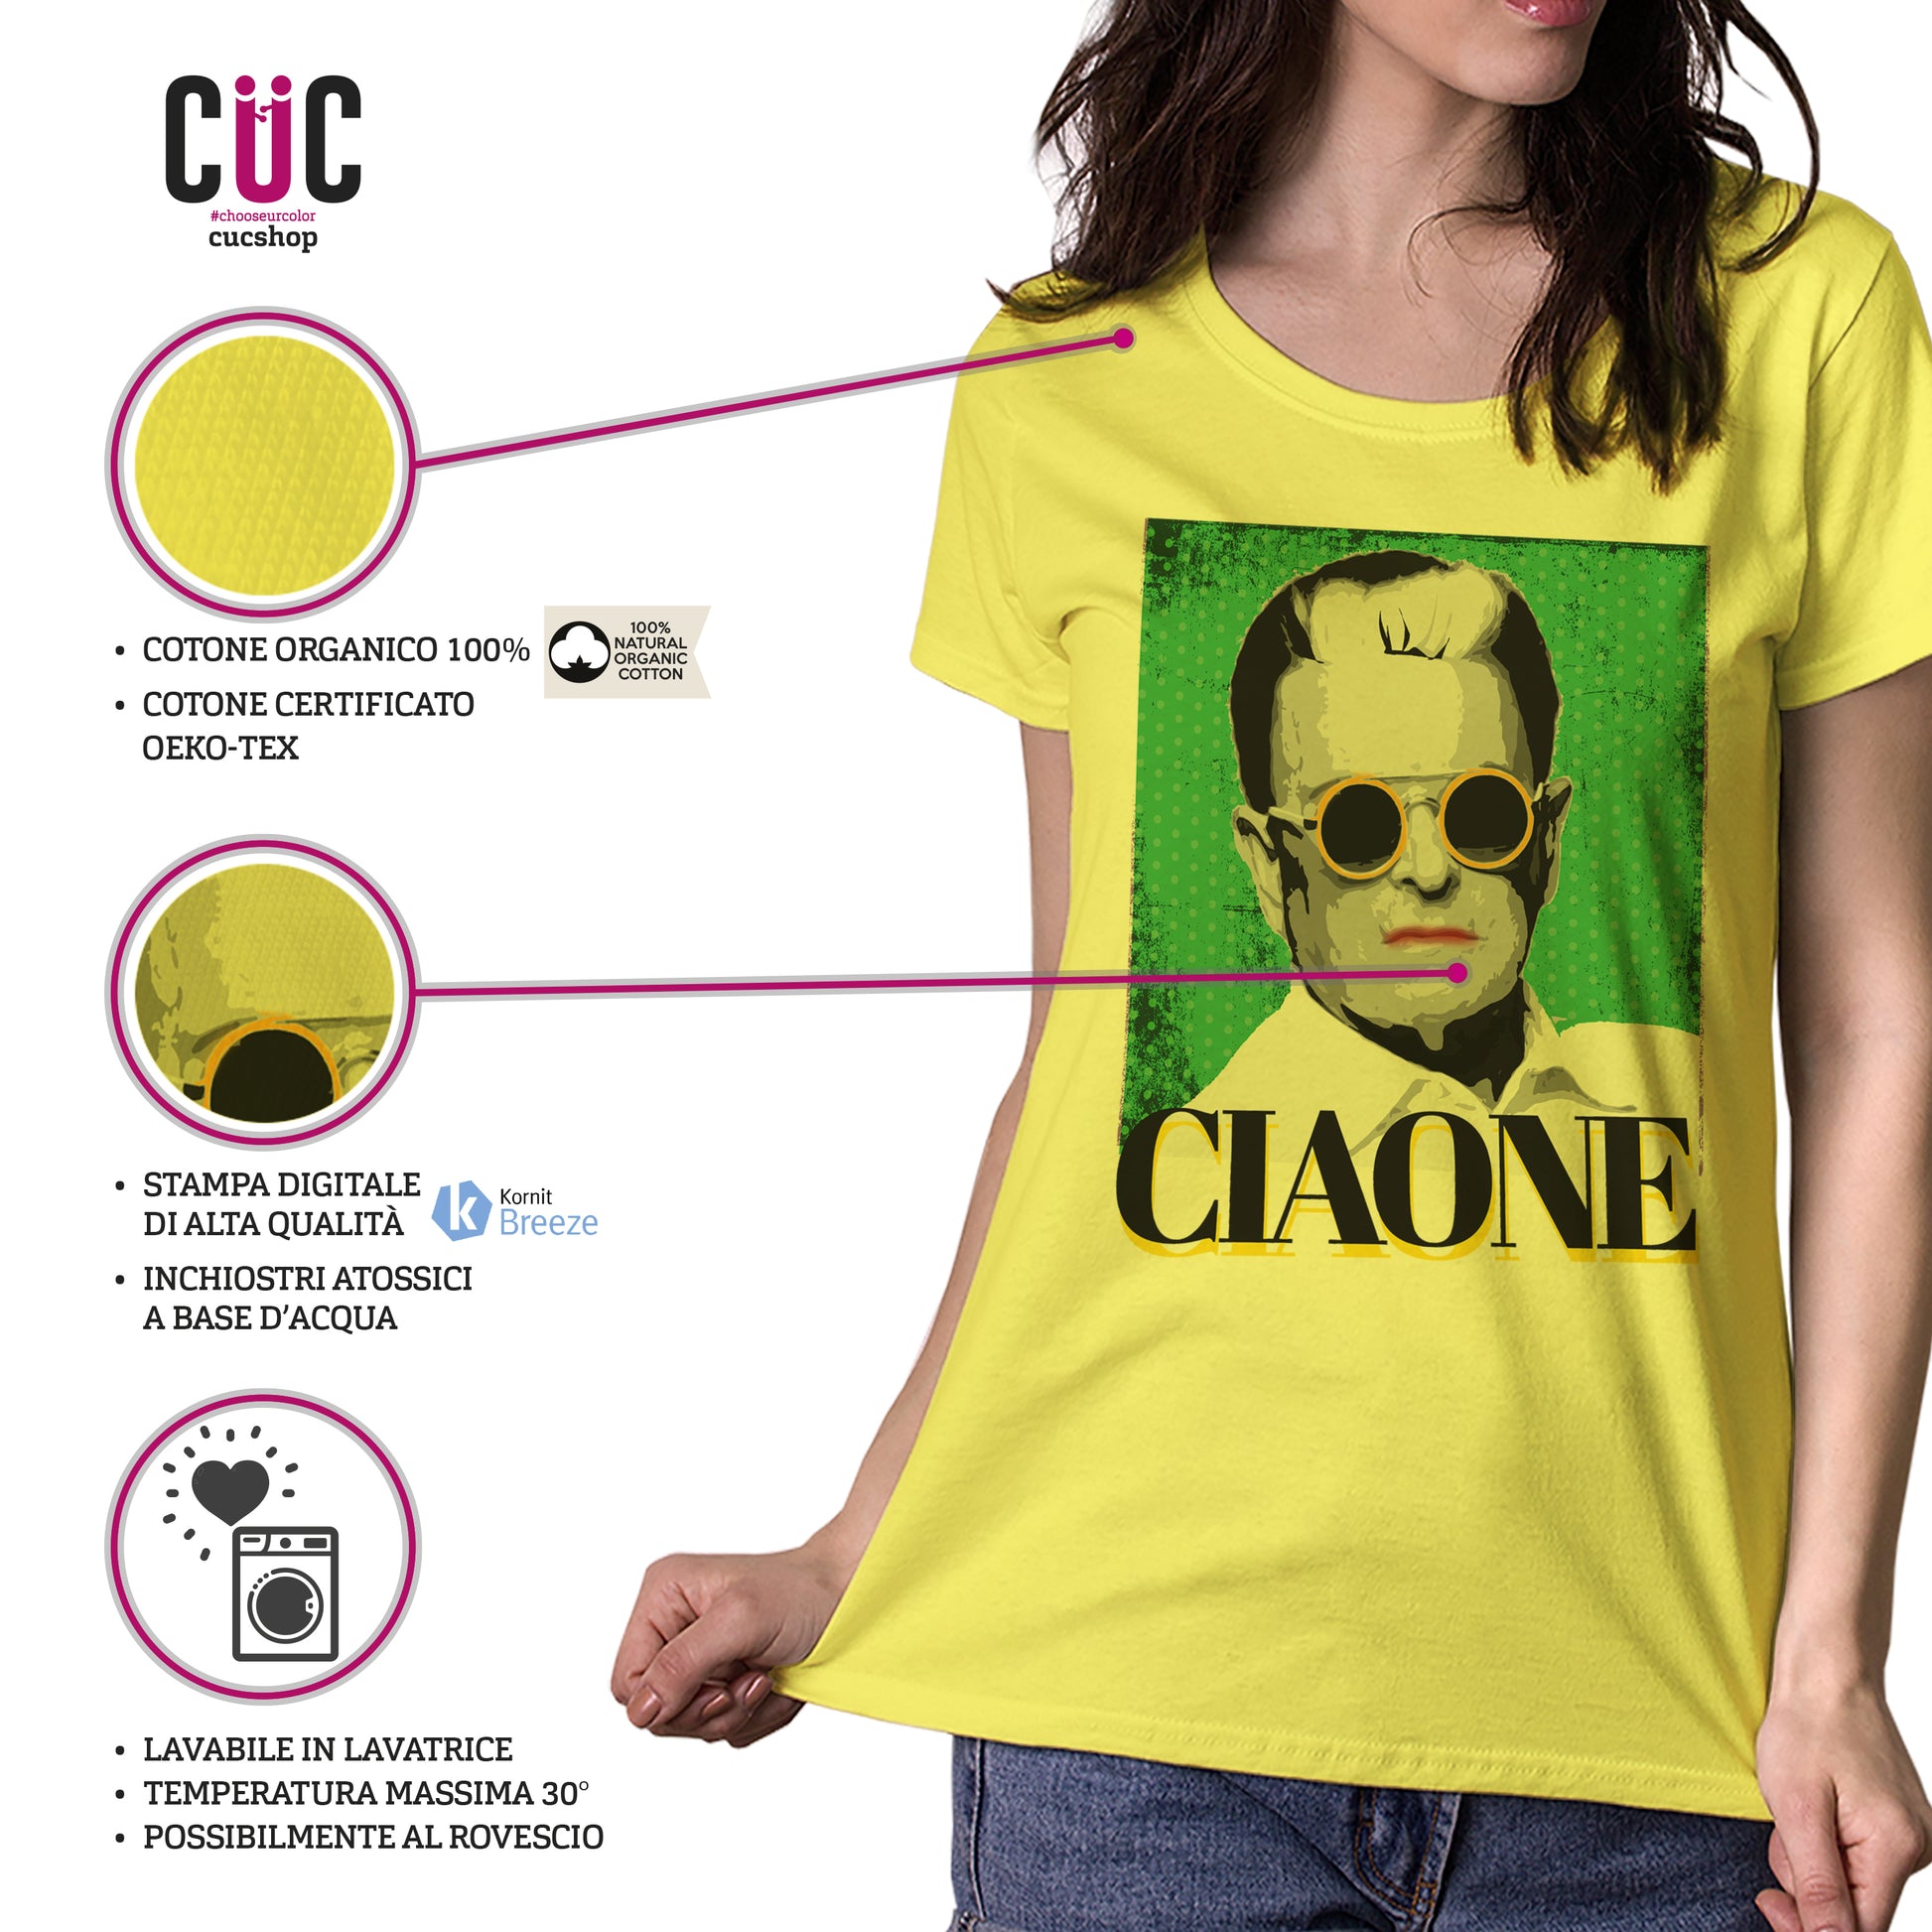 T-Shirt Ciaone Malgioglio - Vero Trash Italiano - Famous people - #chooseurcolor - CUC chooseurcolor